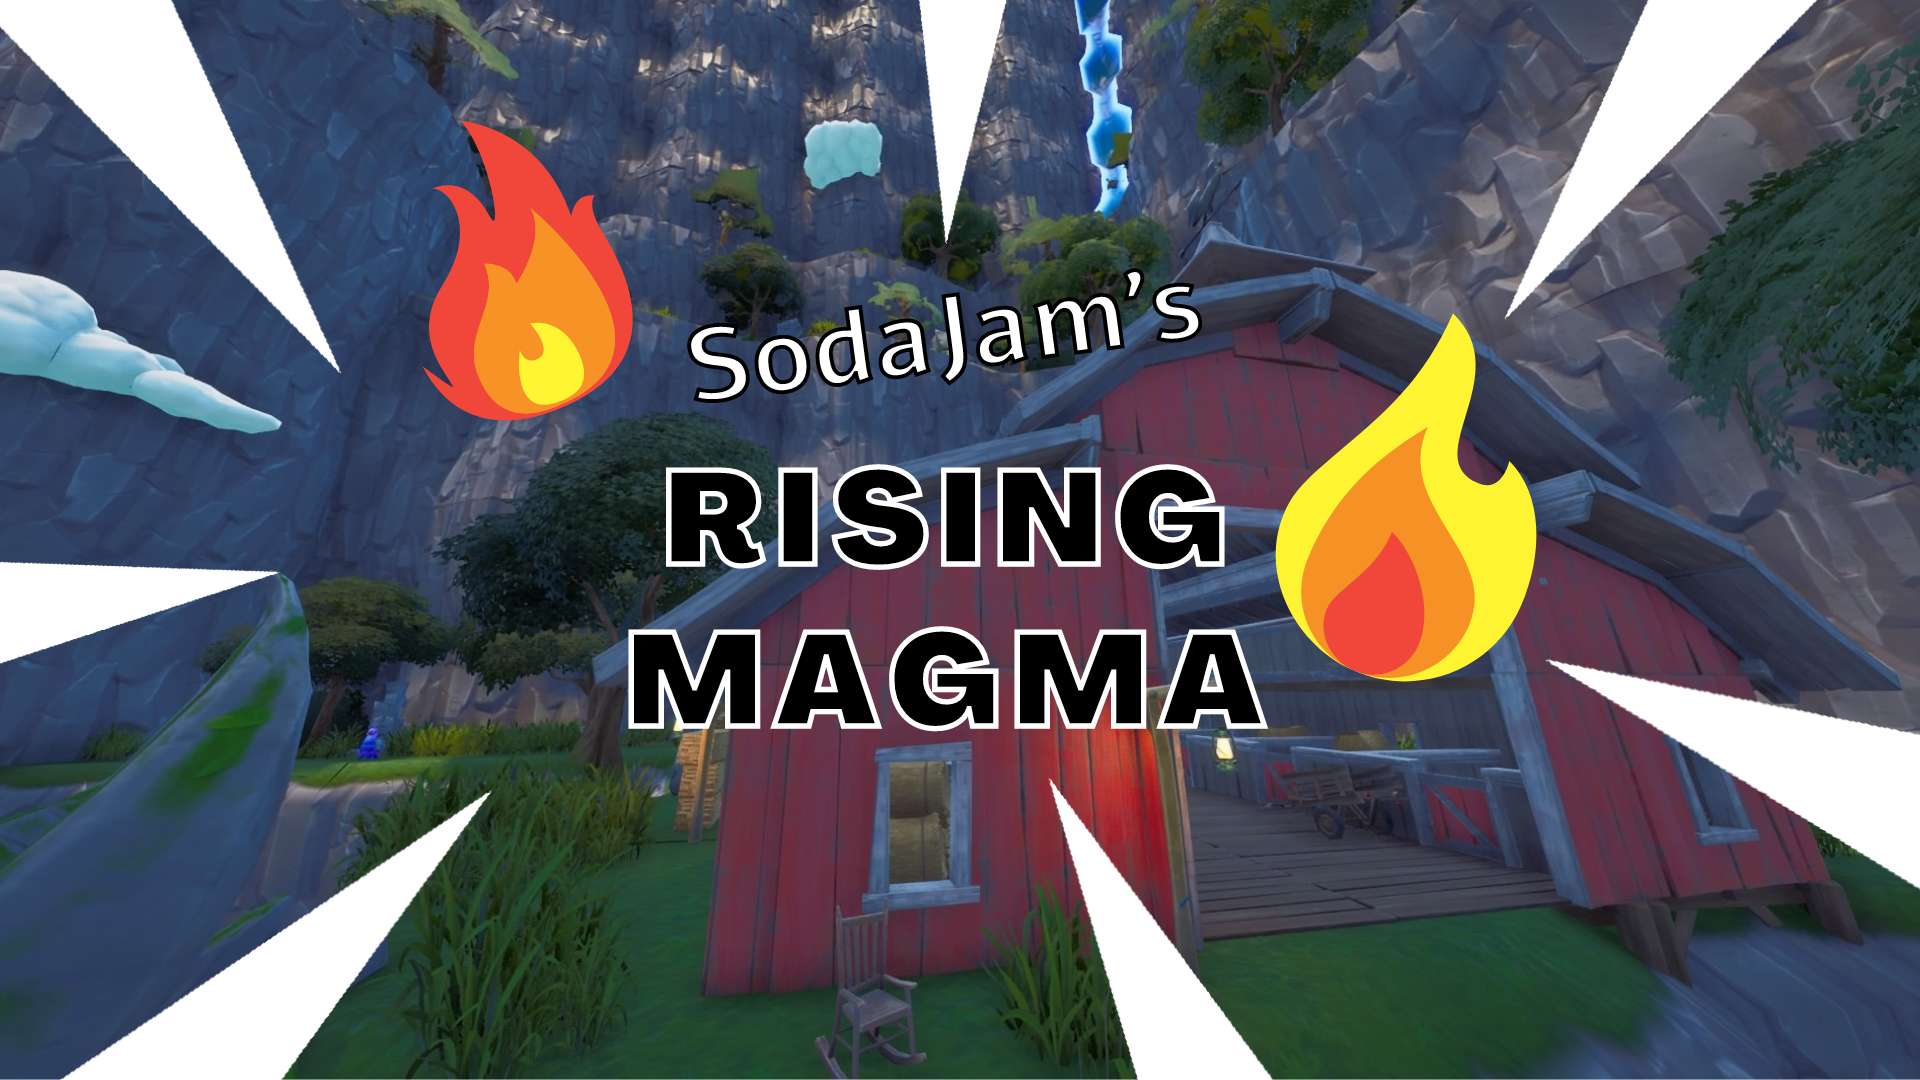 Rising magma